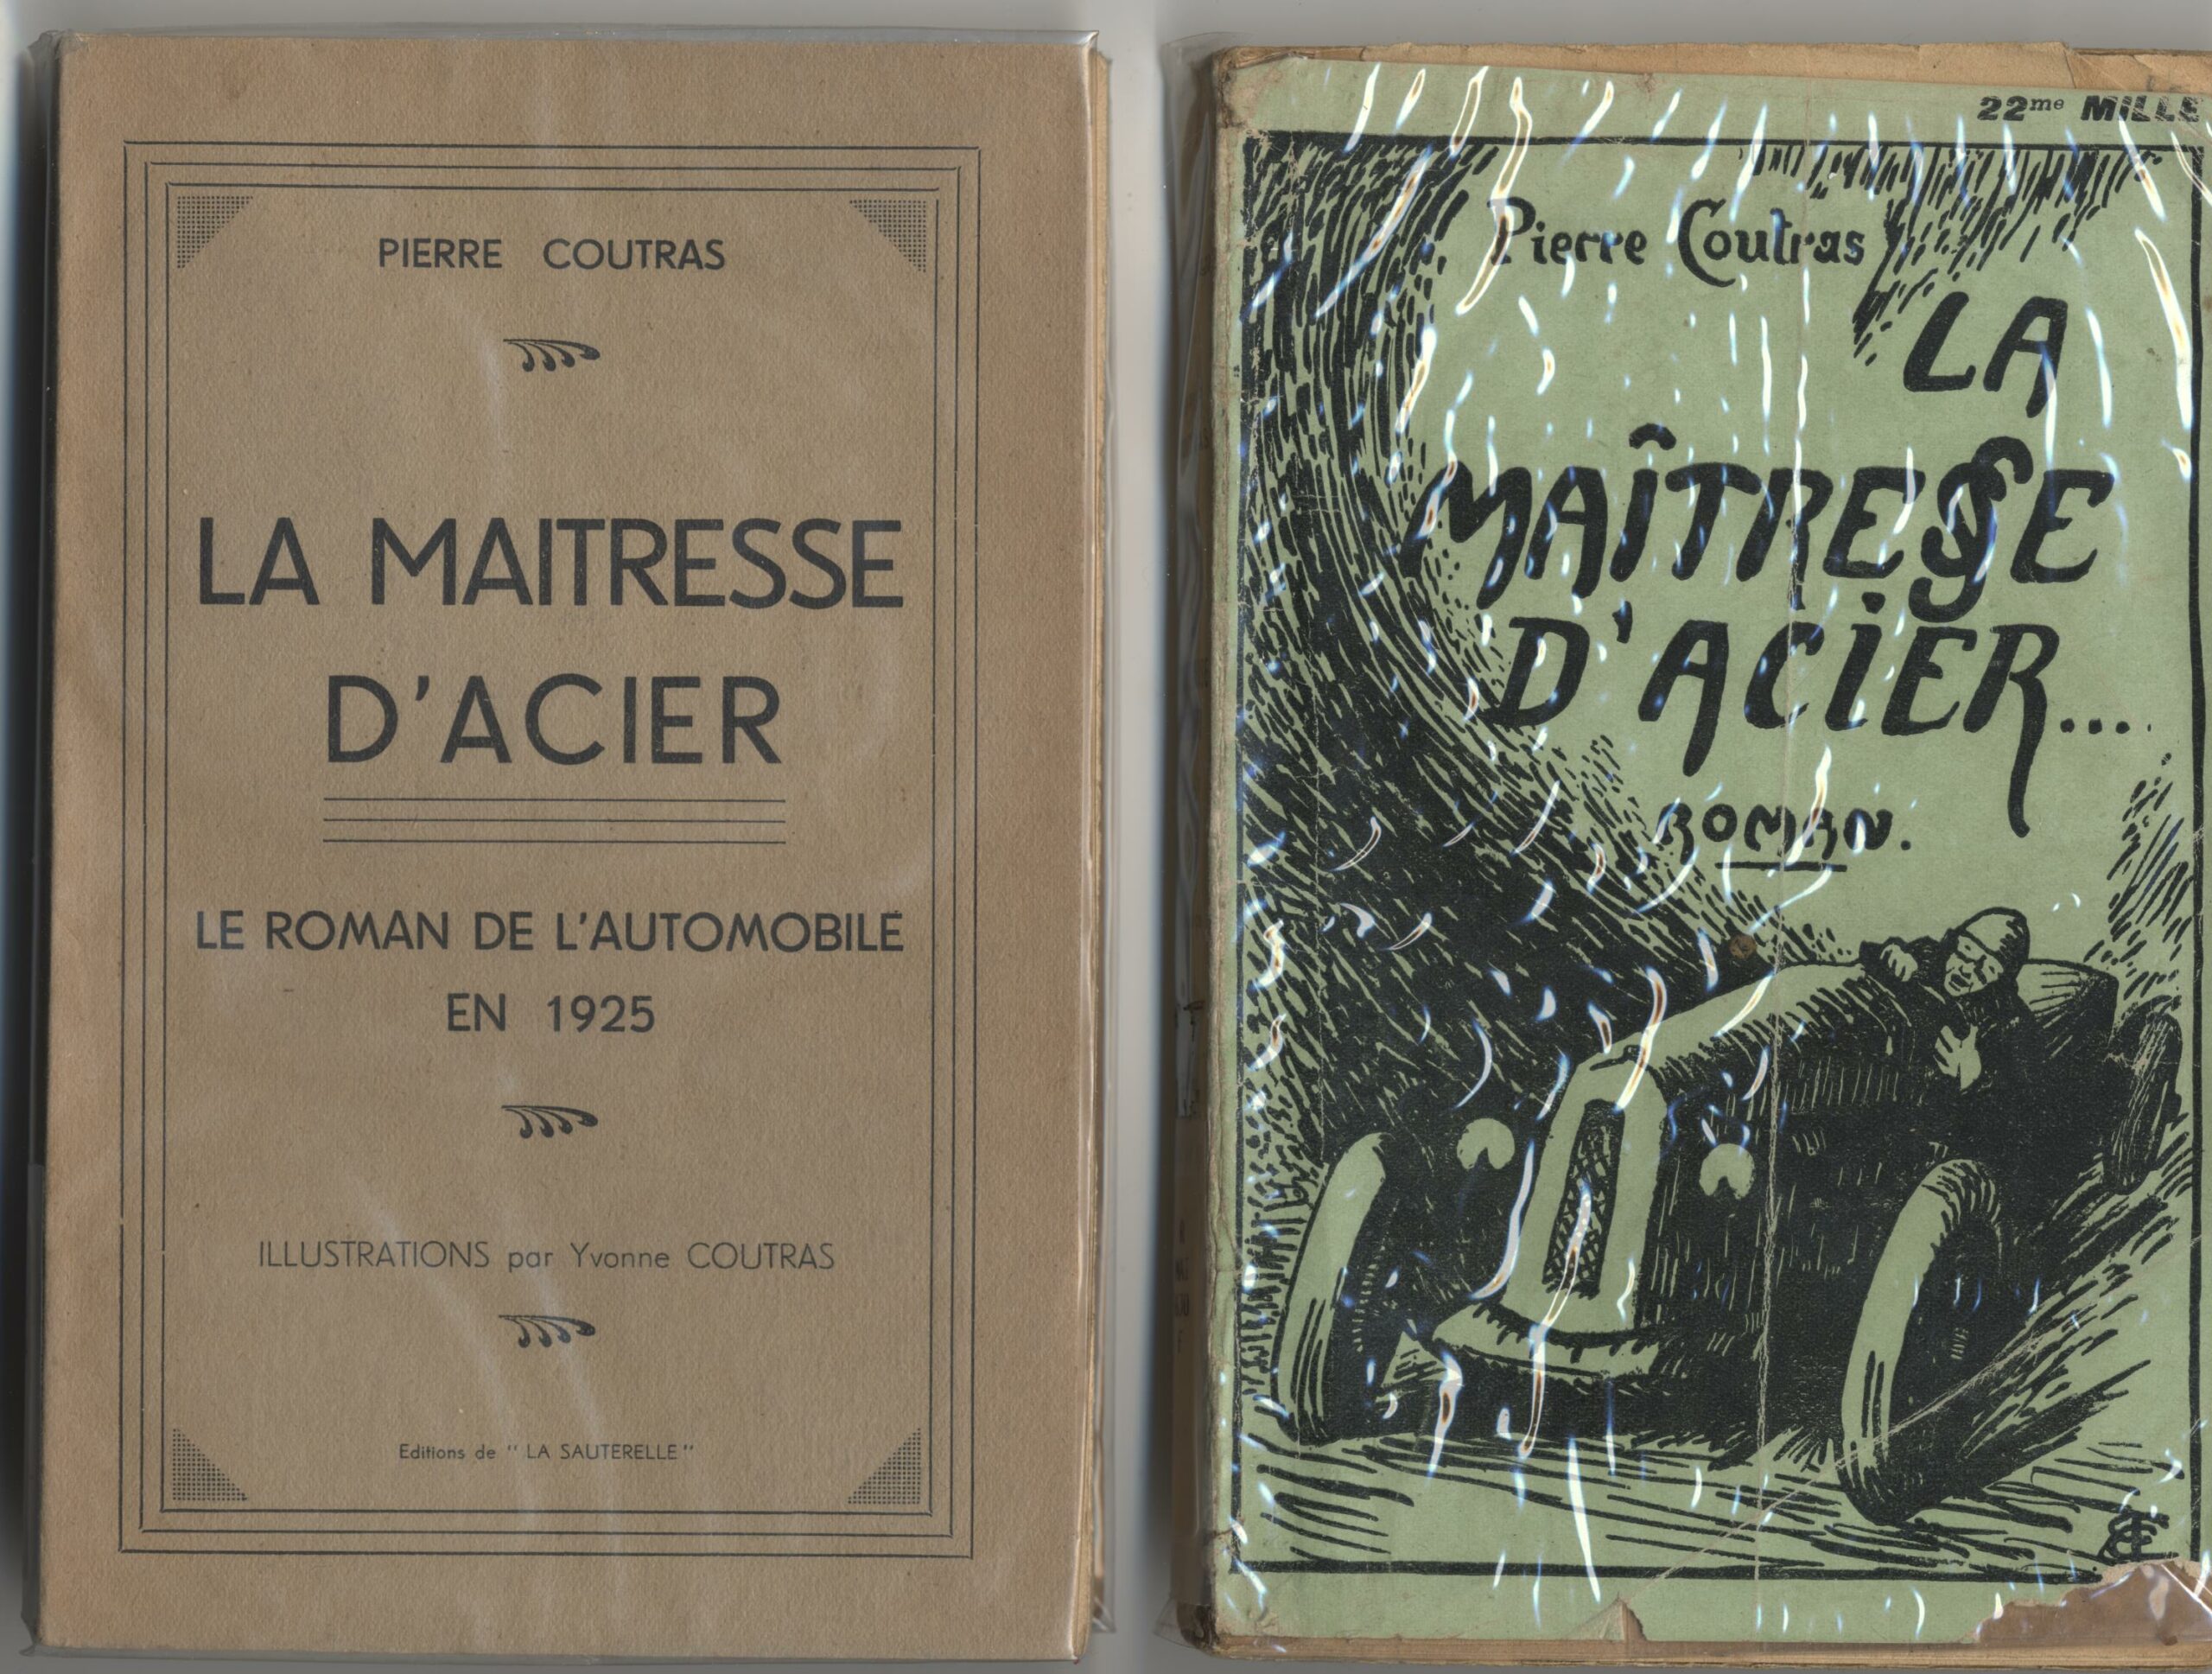 LA MAÎTRESSE D'ACIER - livre, ebook, epub - idée lecture